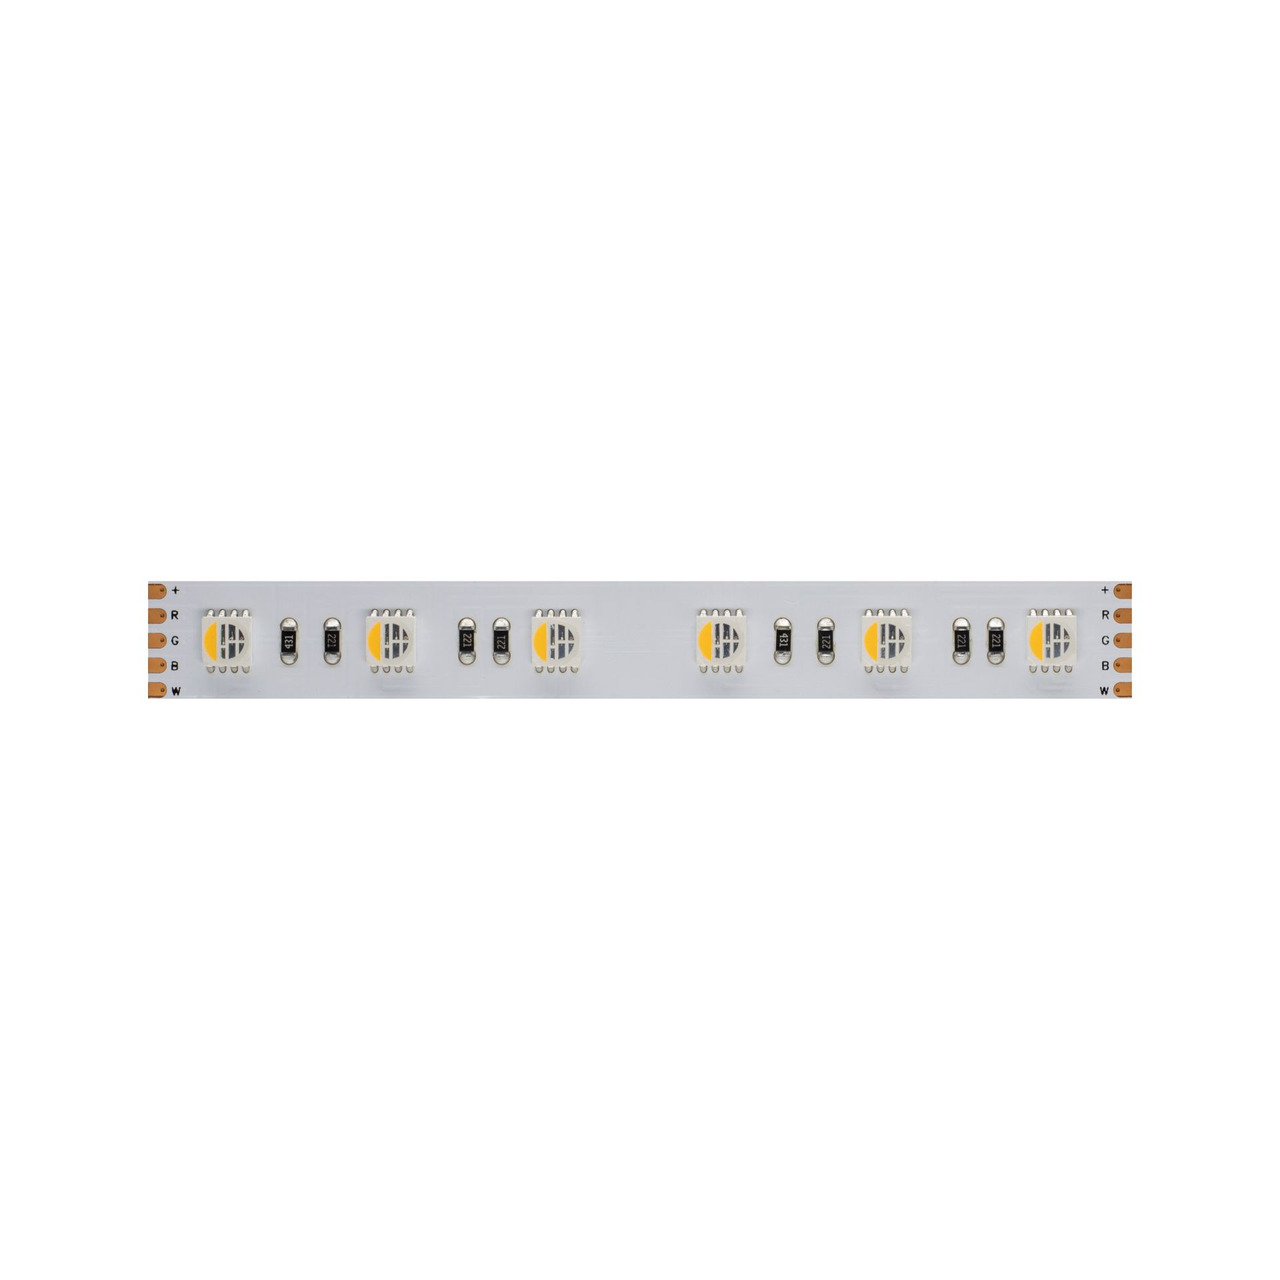 Beneito 5-m-LED-Streifen FINE-47- 72 W- 24 V DC- RGBW (3000 K)- 14-4 W-m- 691 lm-m- 60 LEDs-m- IP20 unter Beleuchtung